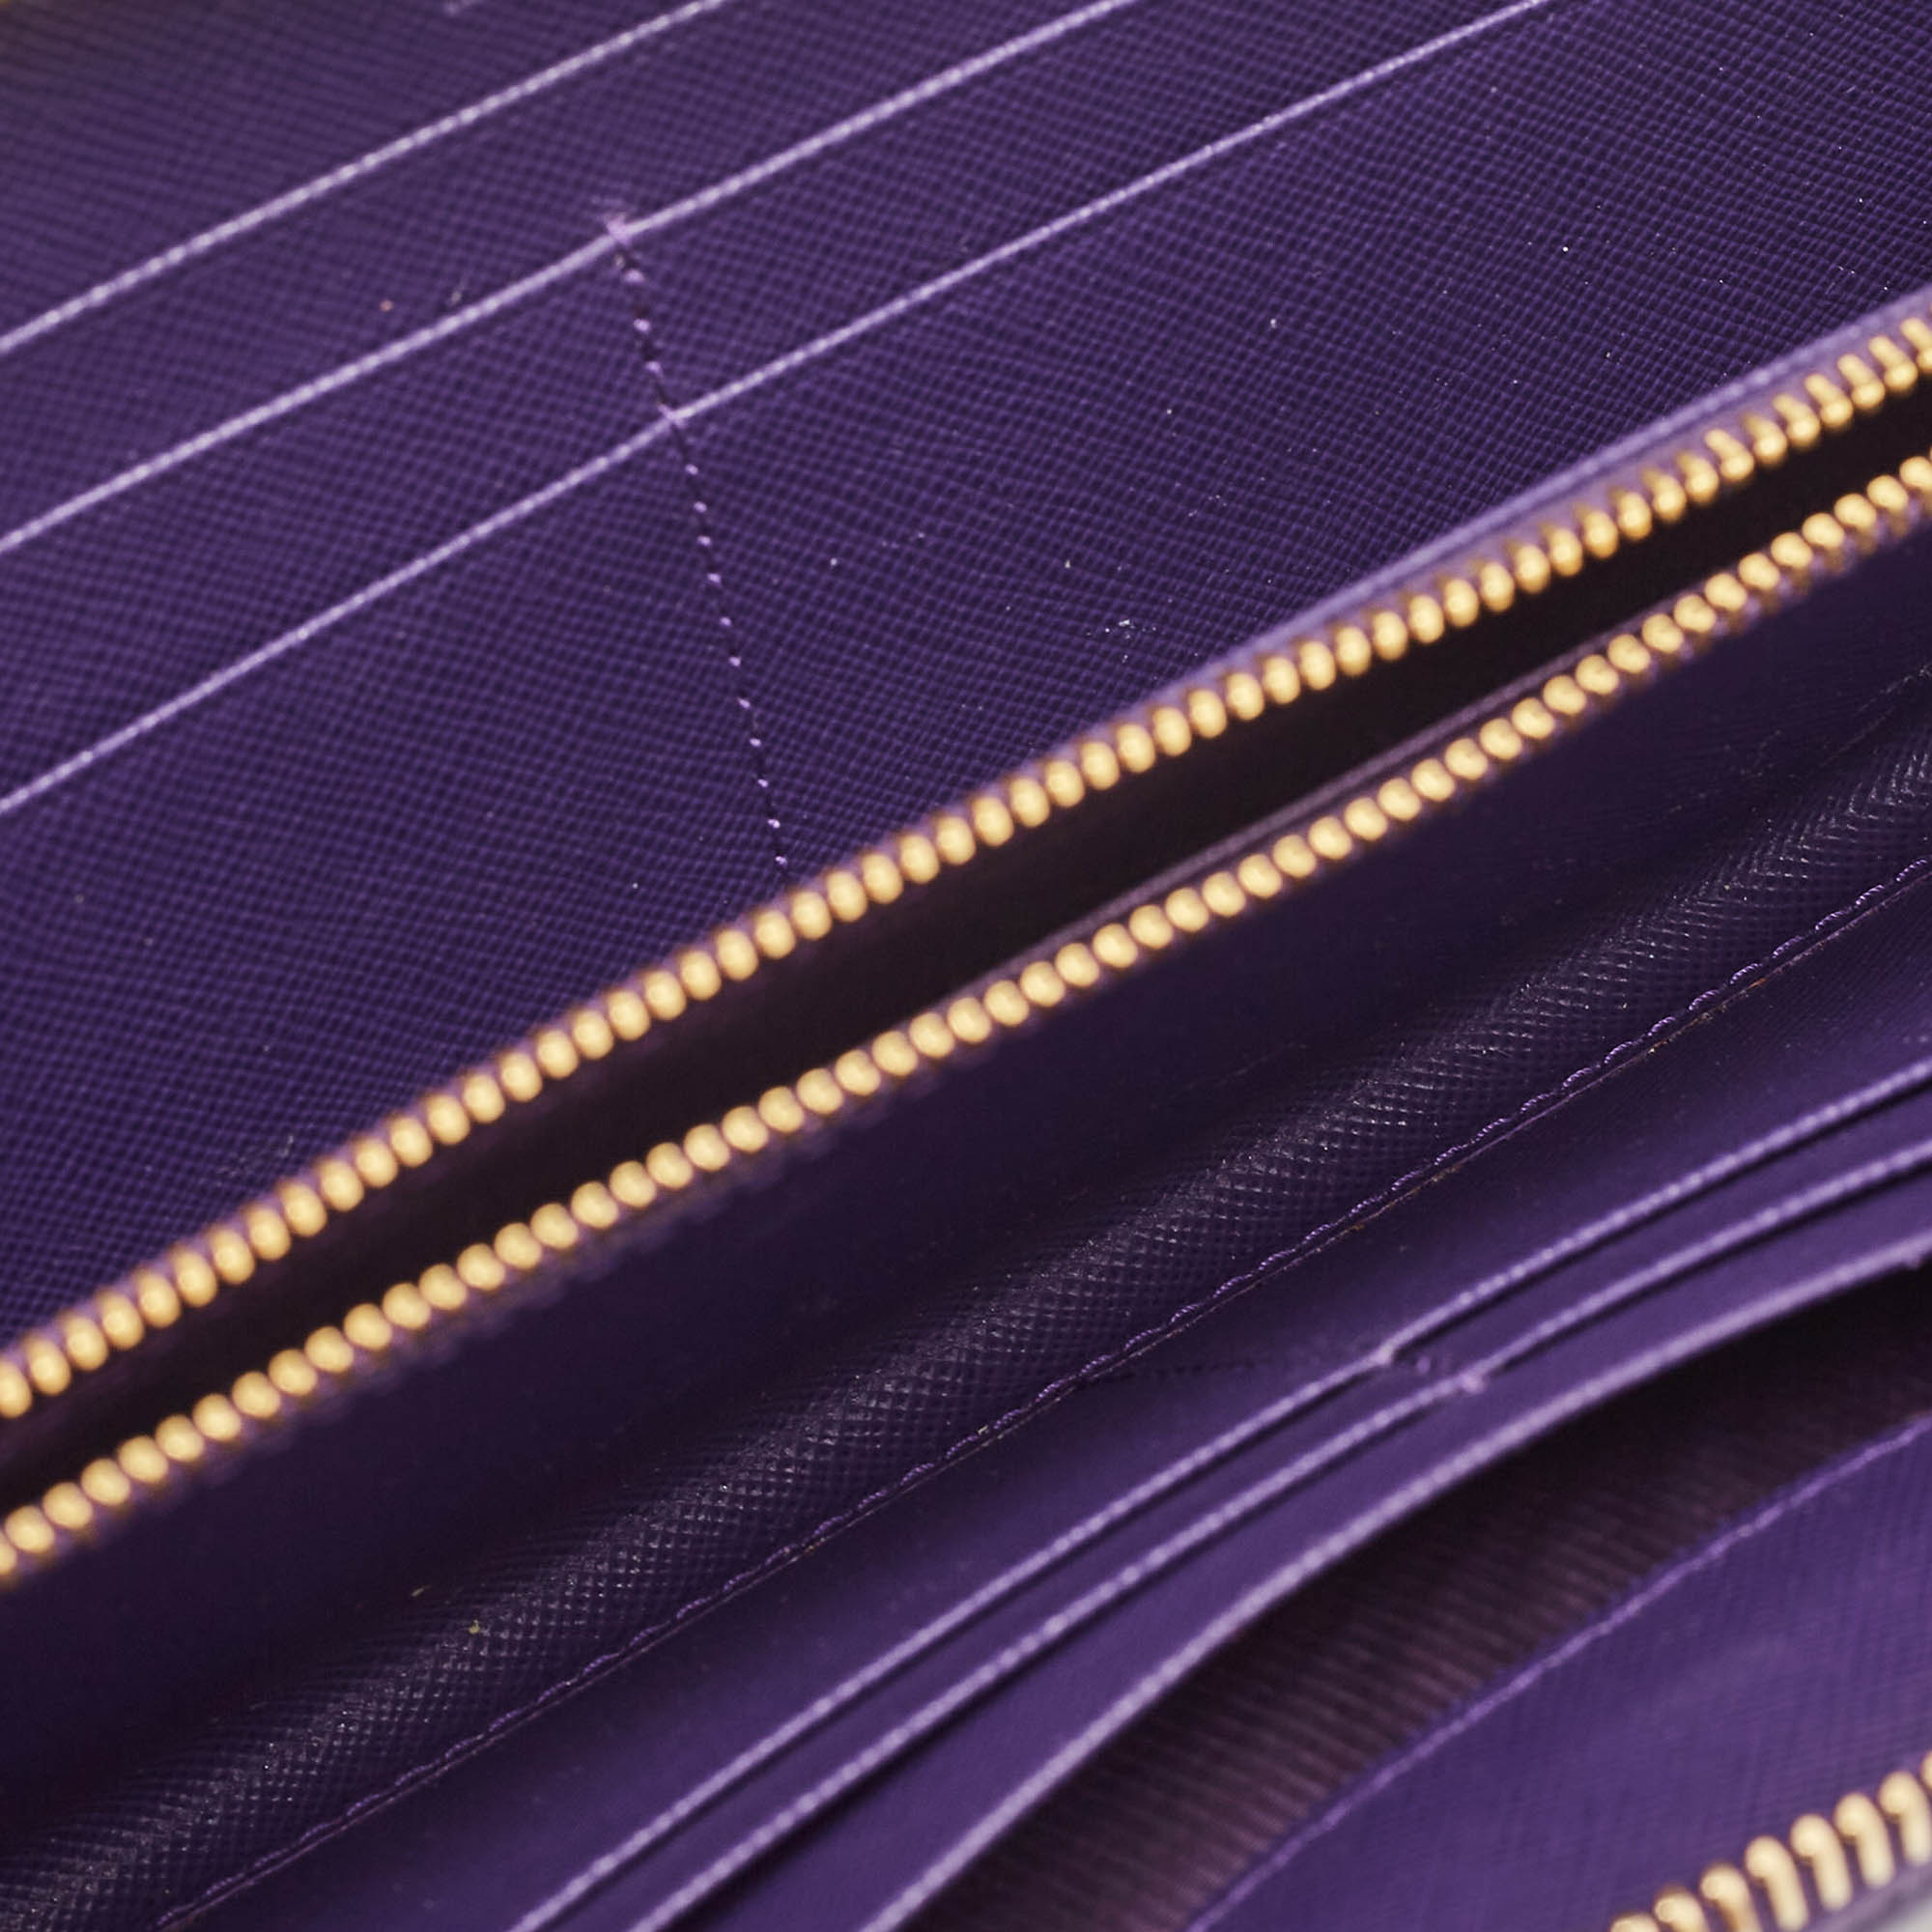 Prada Purple Saffiano Leather Bow Zip Around Wallet